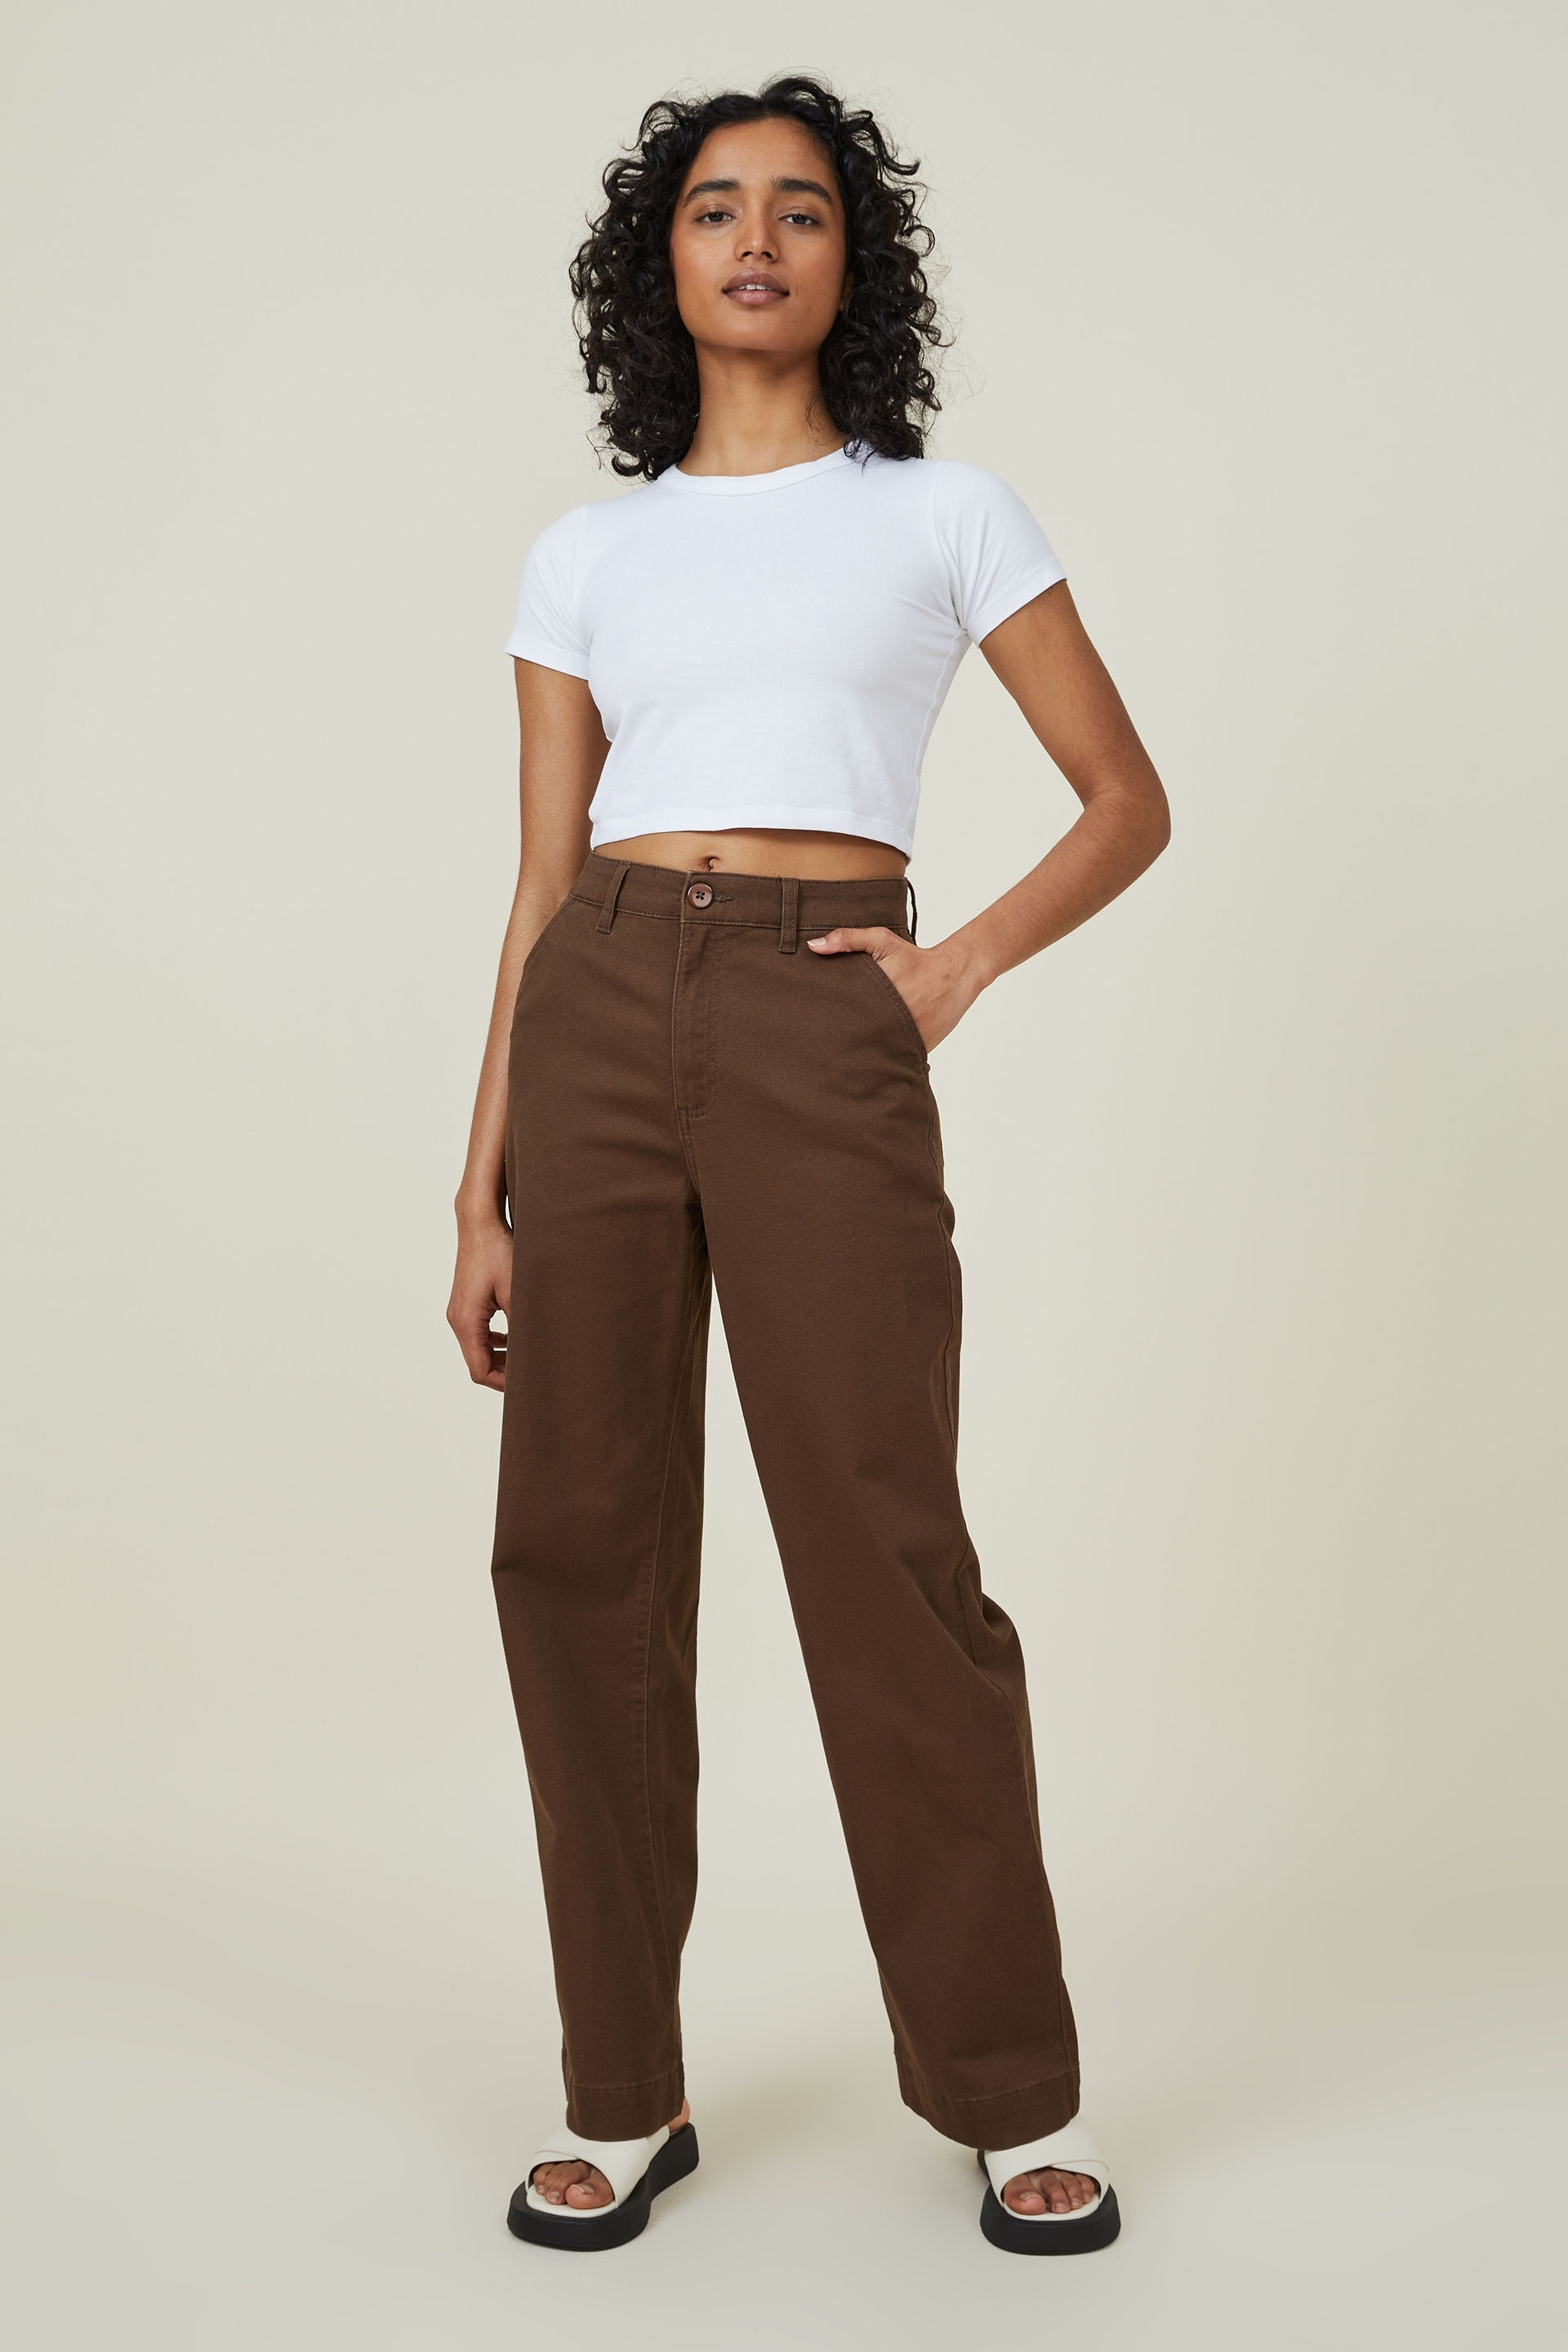 Cotton On Women - Carter Wide Leg Pant - Chocolate brown